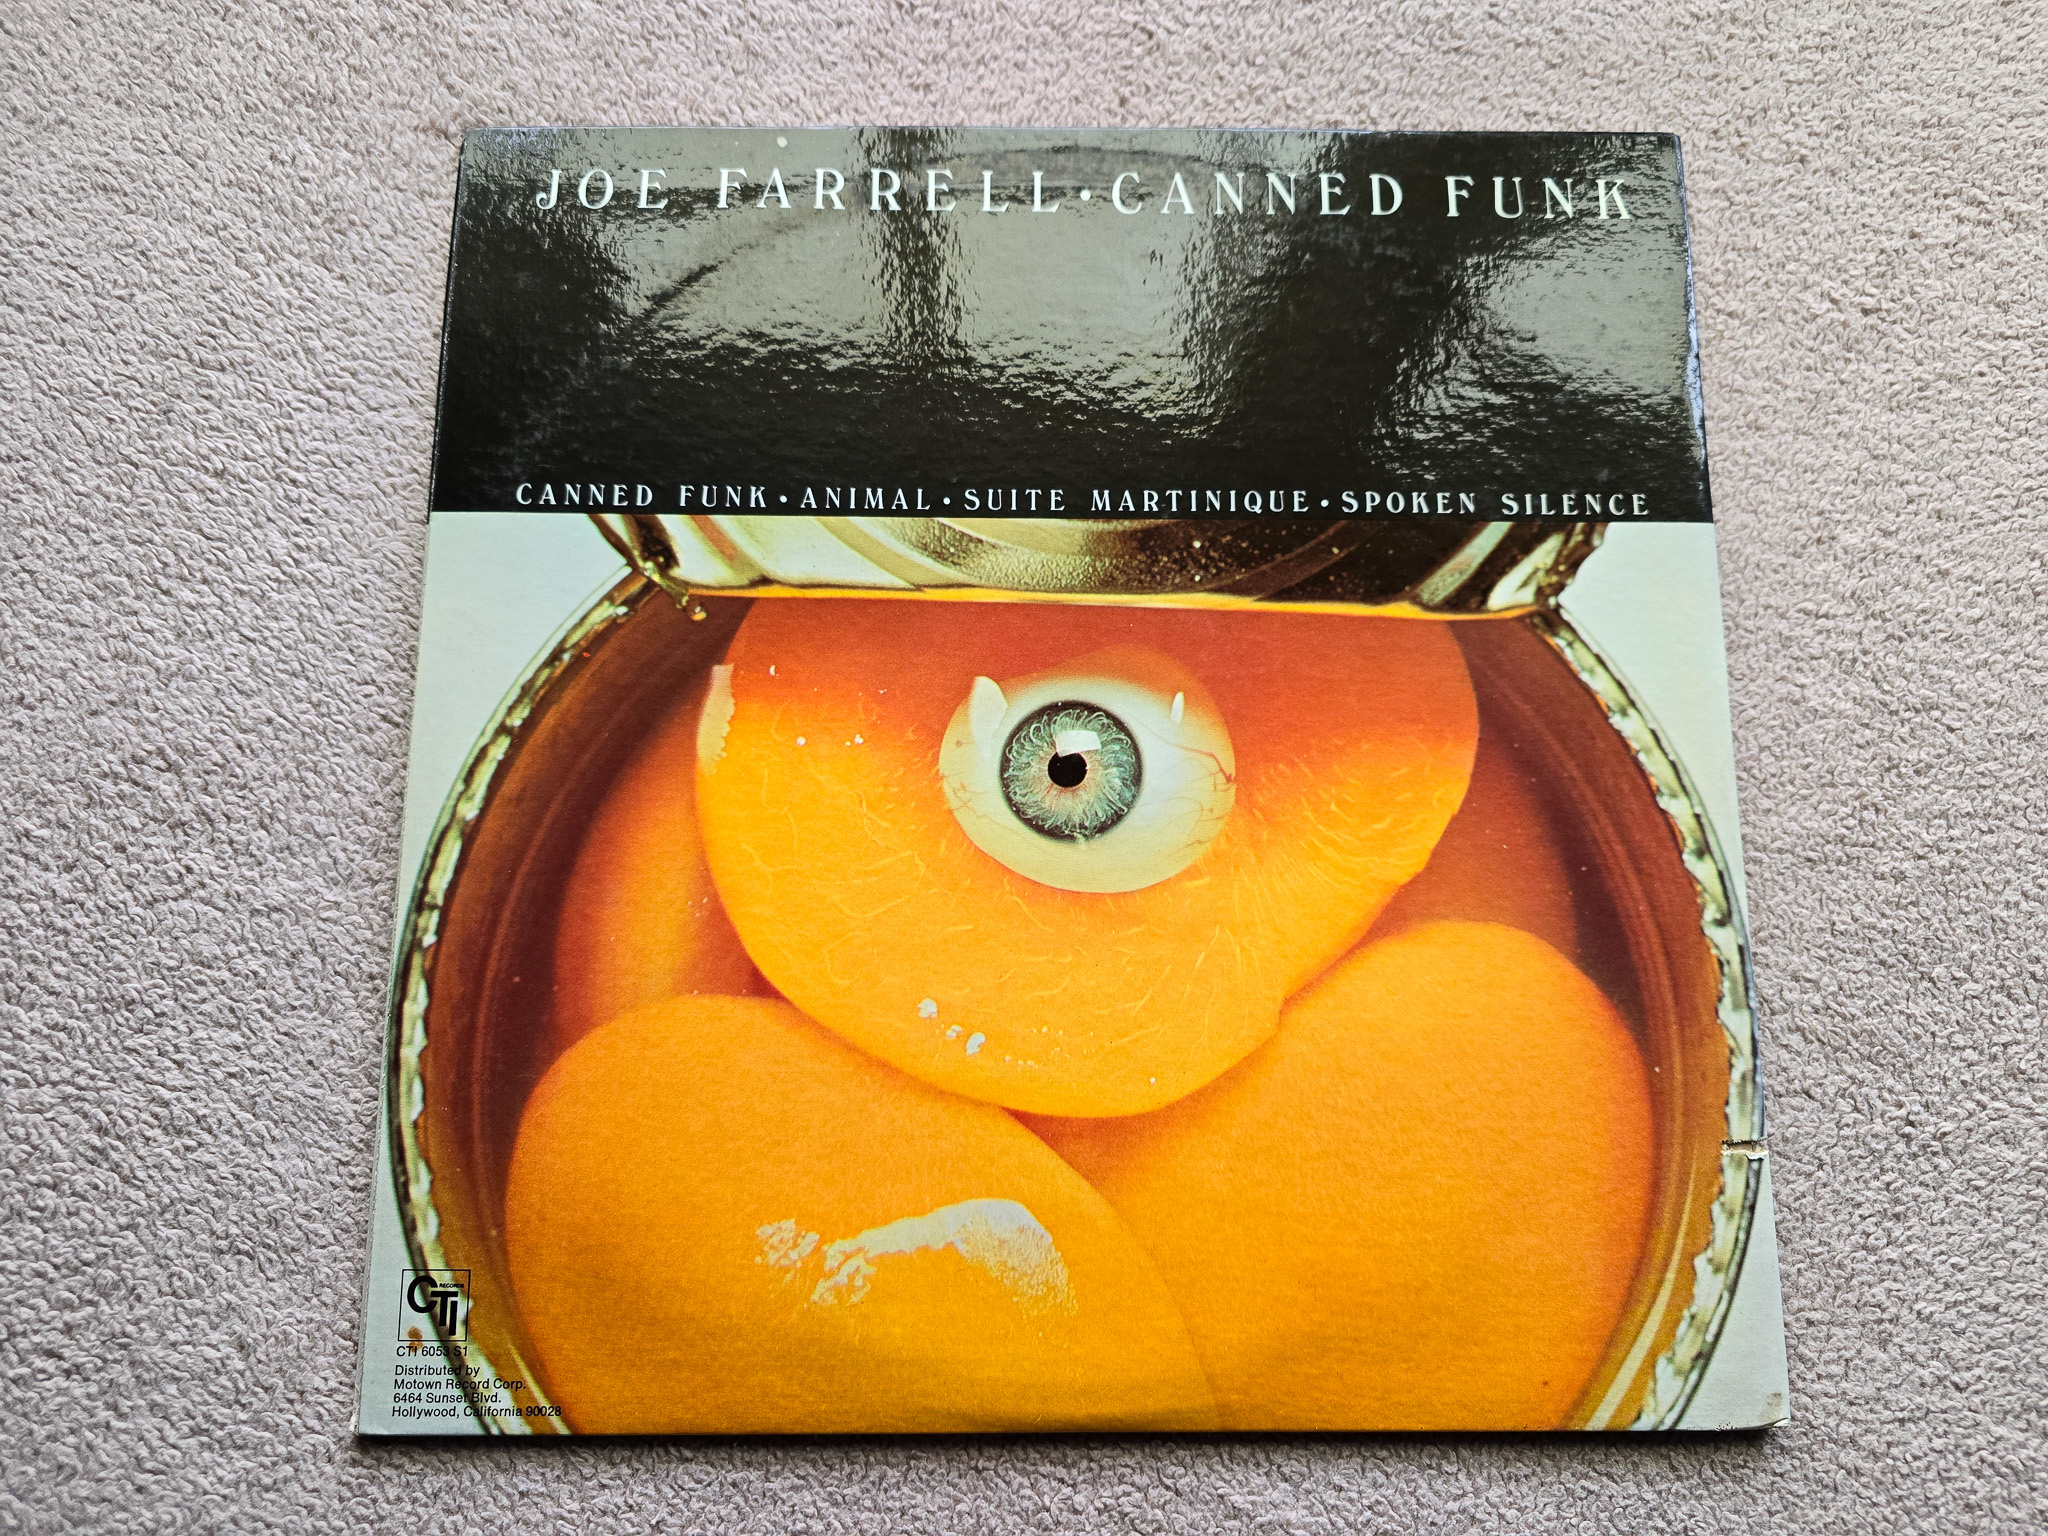 Joe Farrell – Canned Funk Mint Original Jazz Funk US Gatefold LP - Image 3 of 7